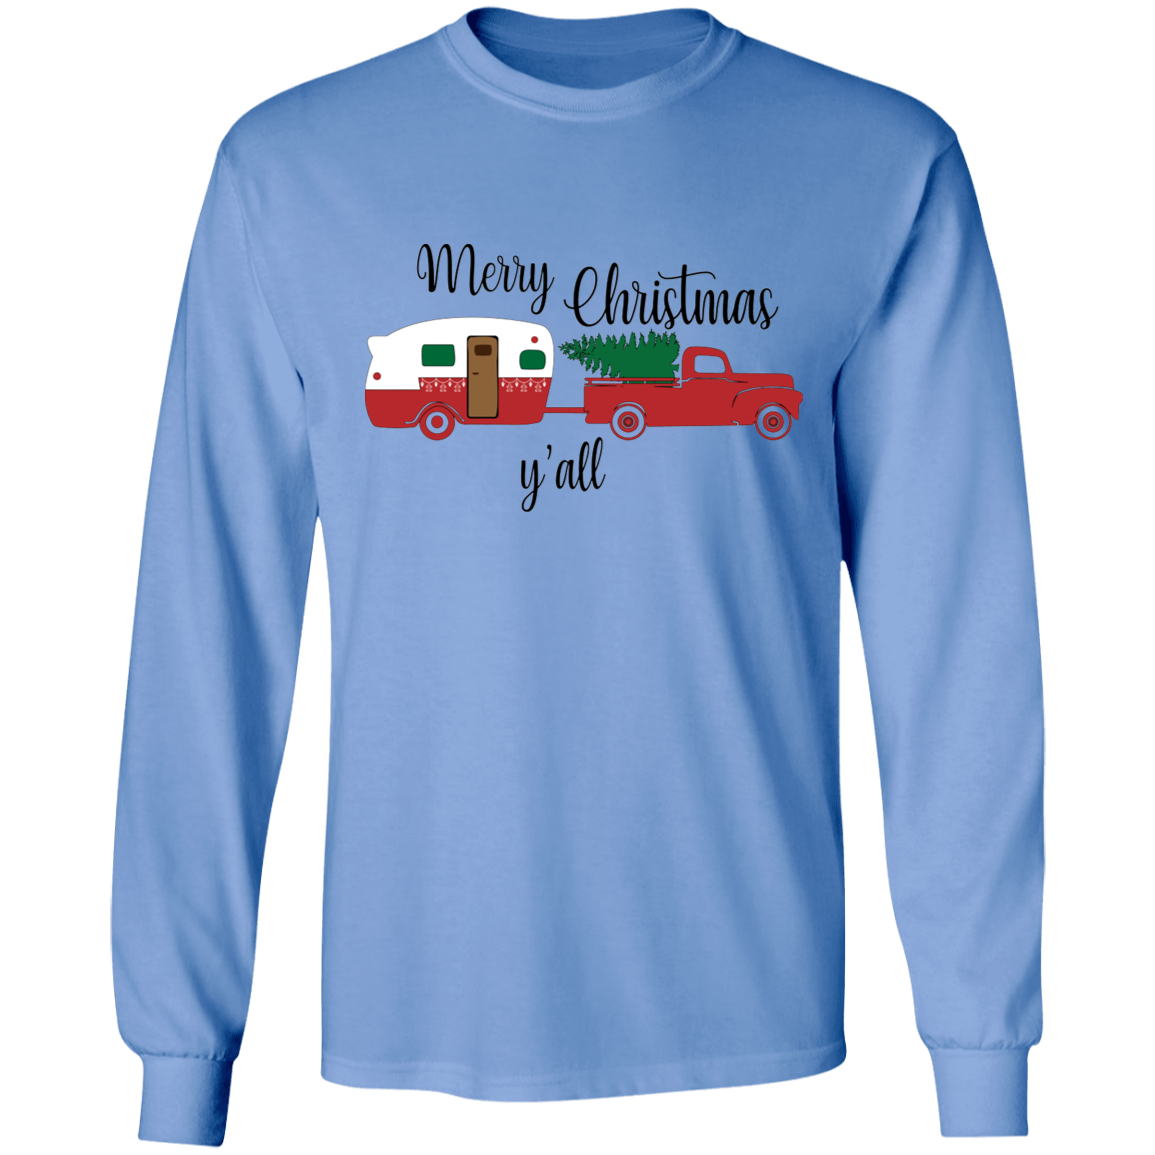 Merry Christmas camper long sleeve T'shirt